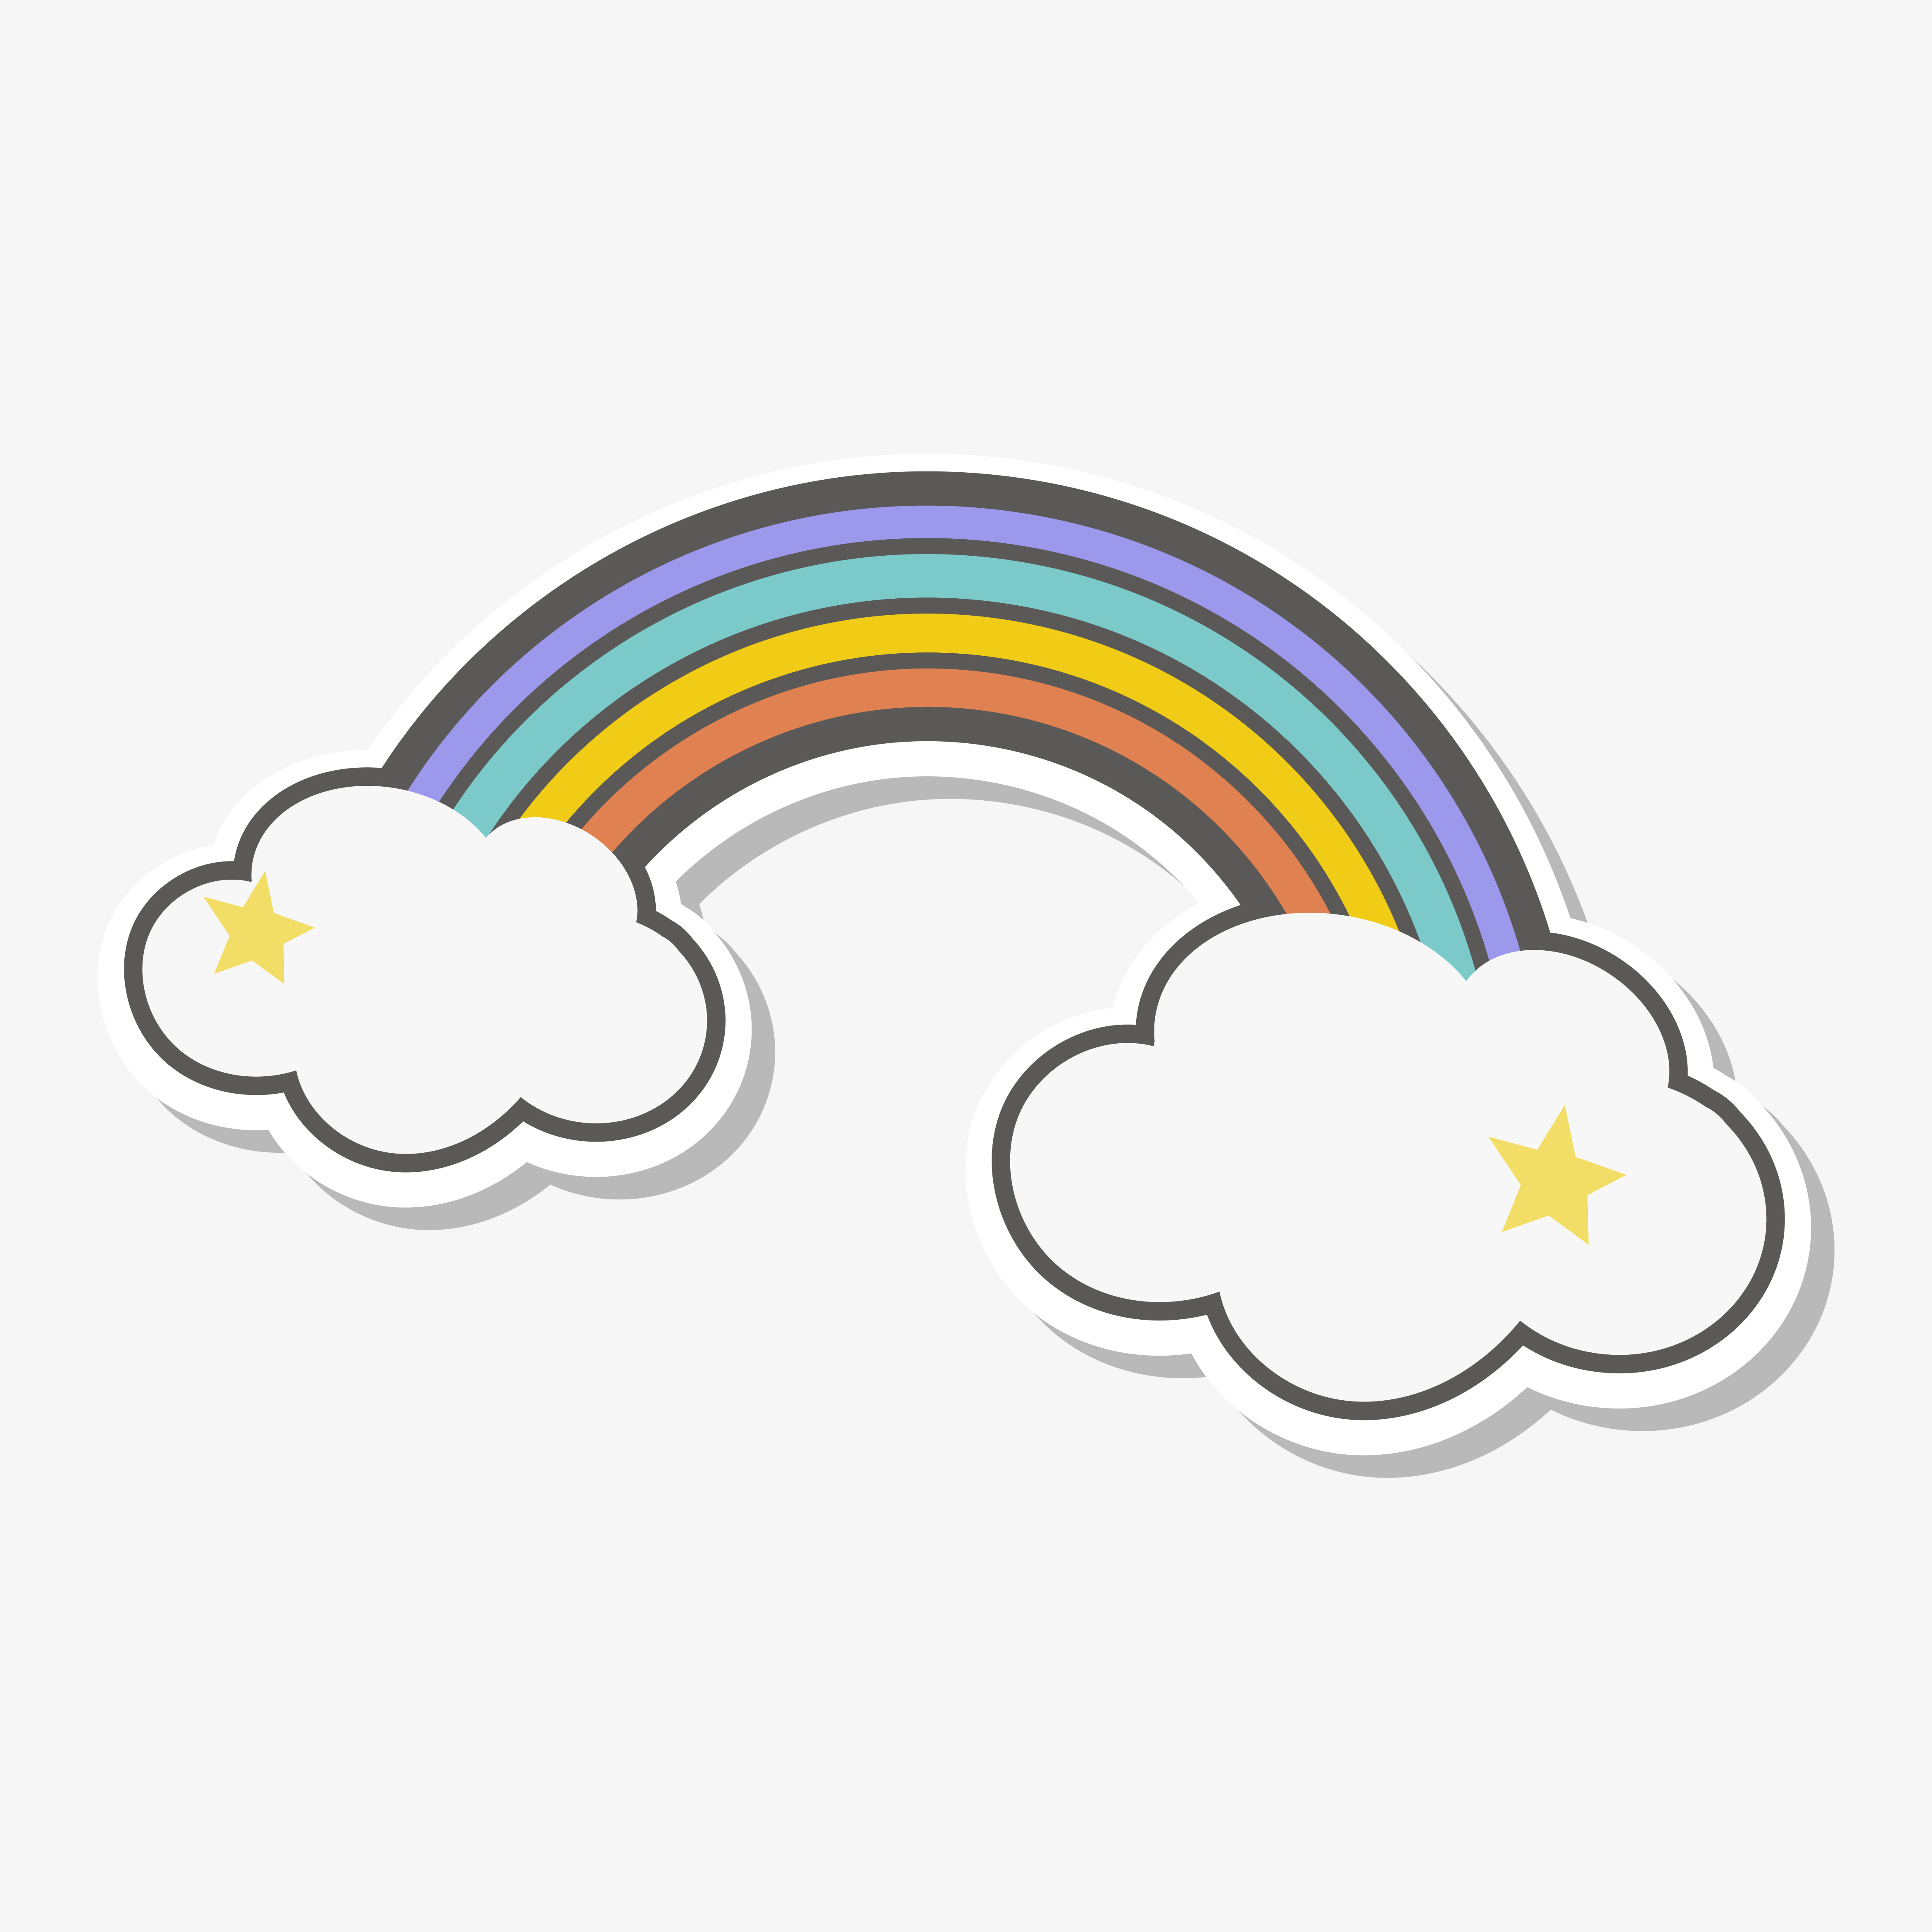 Magical rainbow unicorn illustration vector - Download Free Vectors